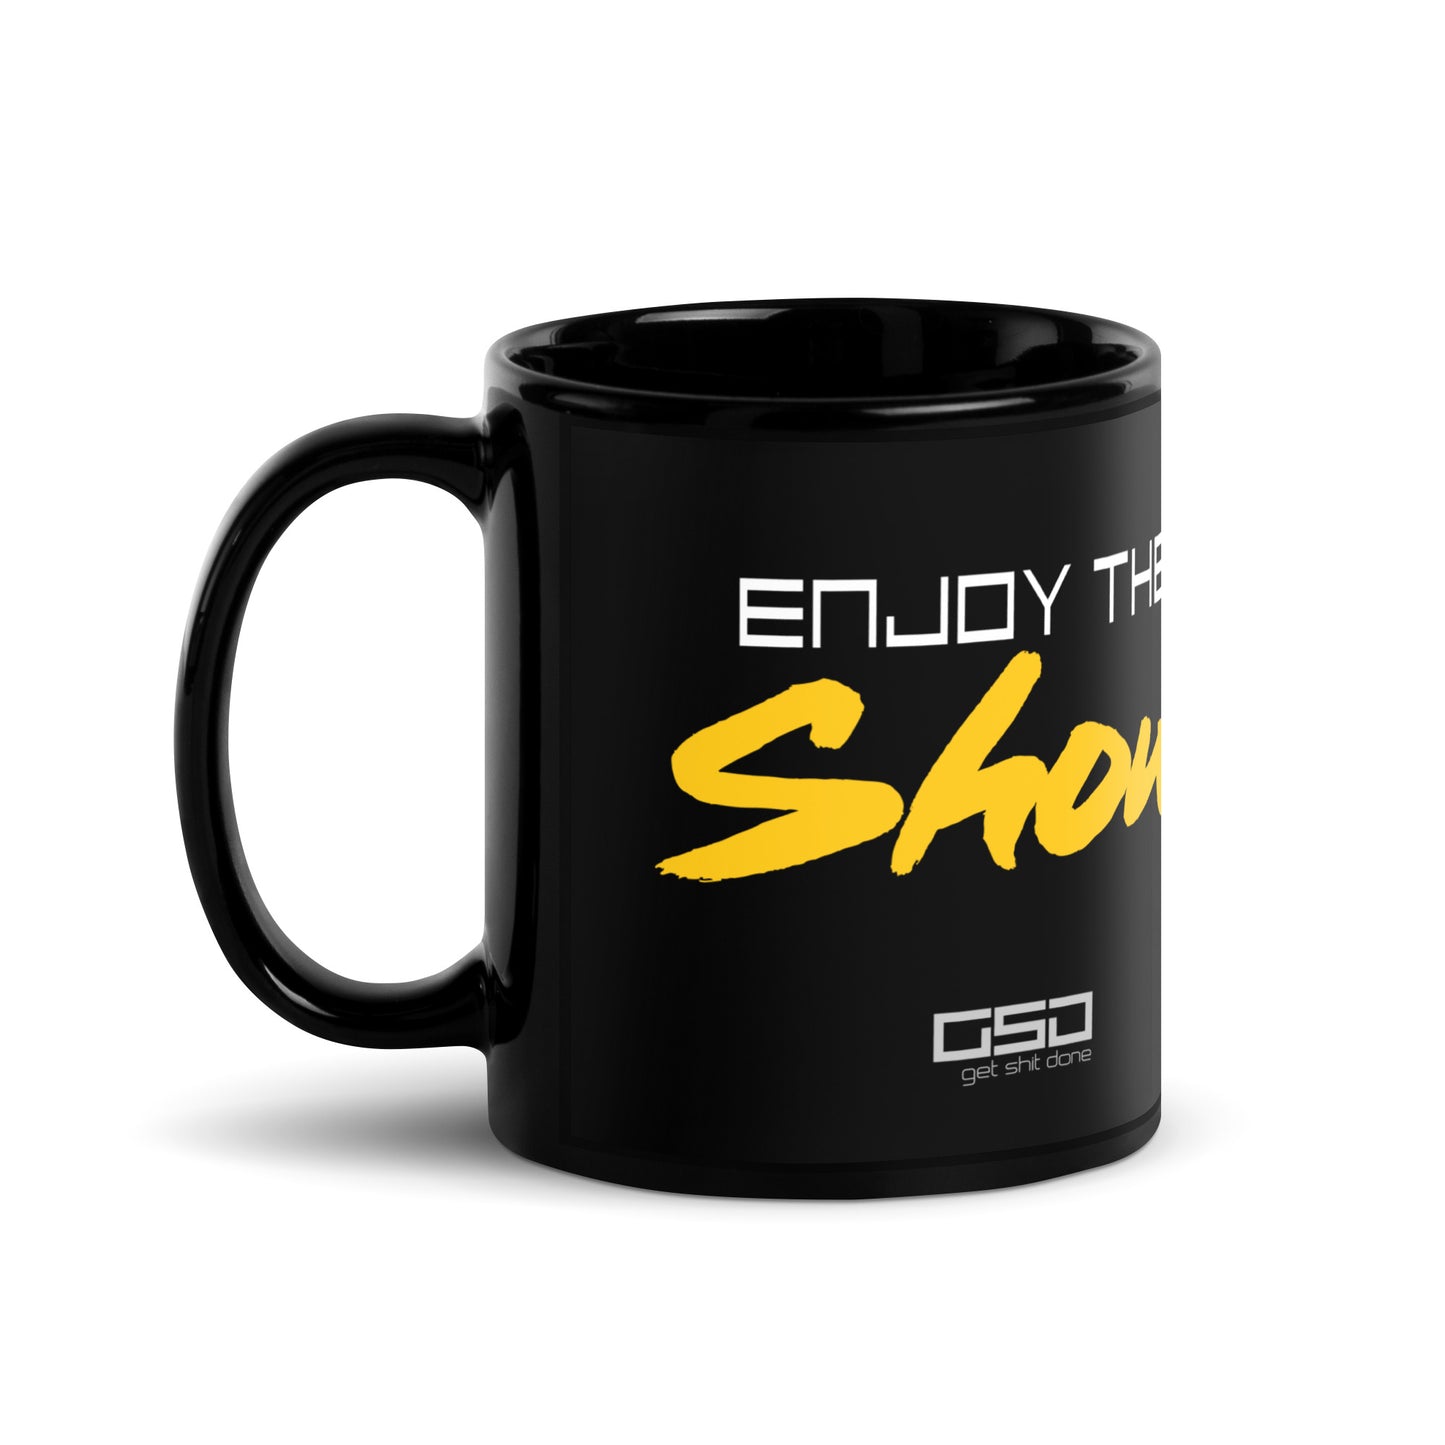 Enjoy The Show- Black Glossy Mug